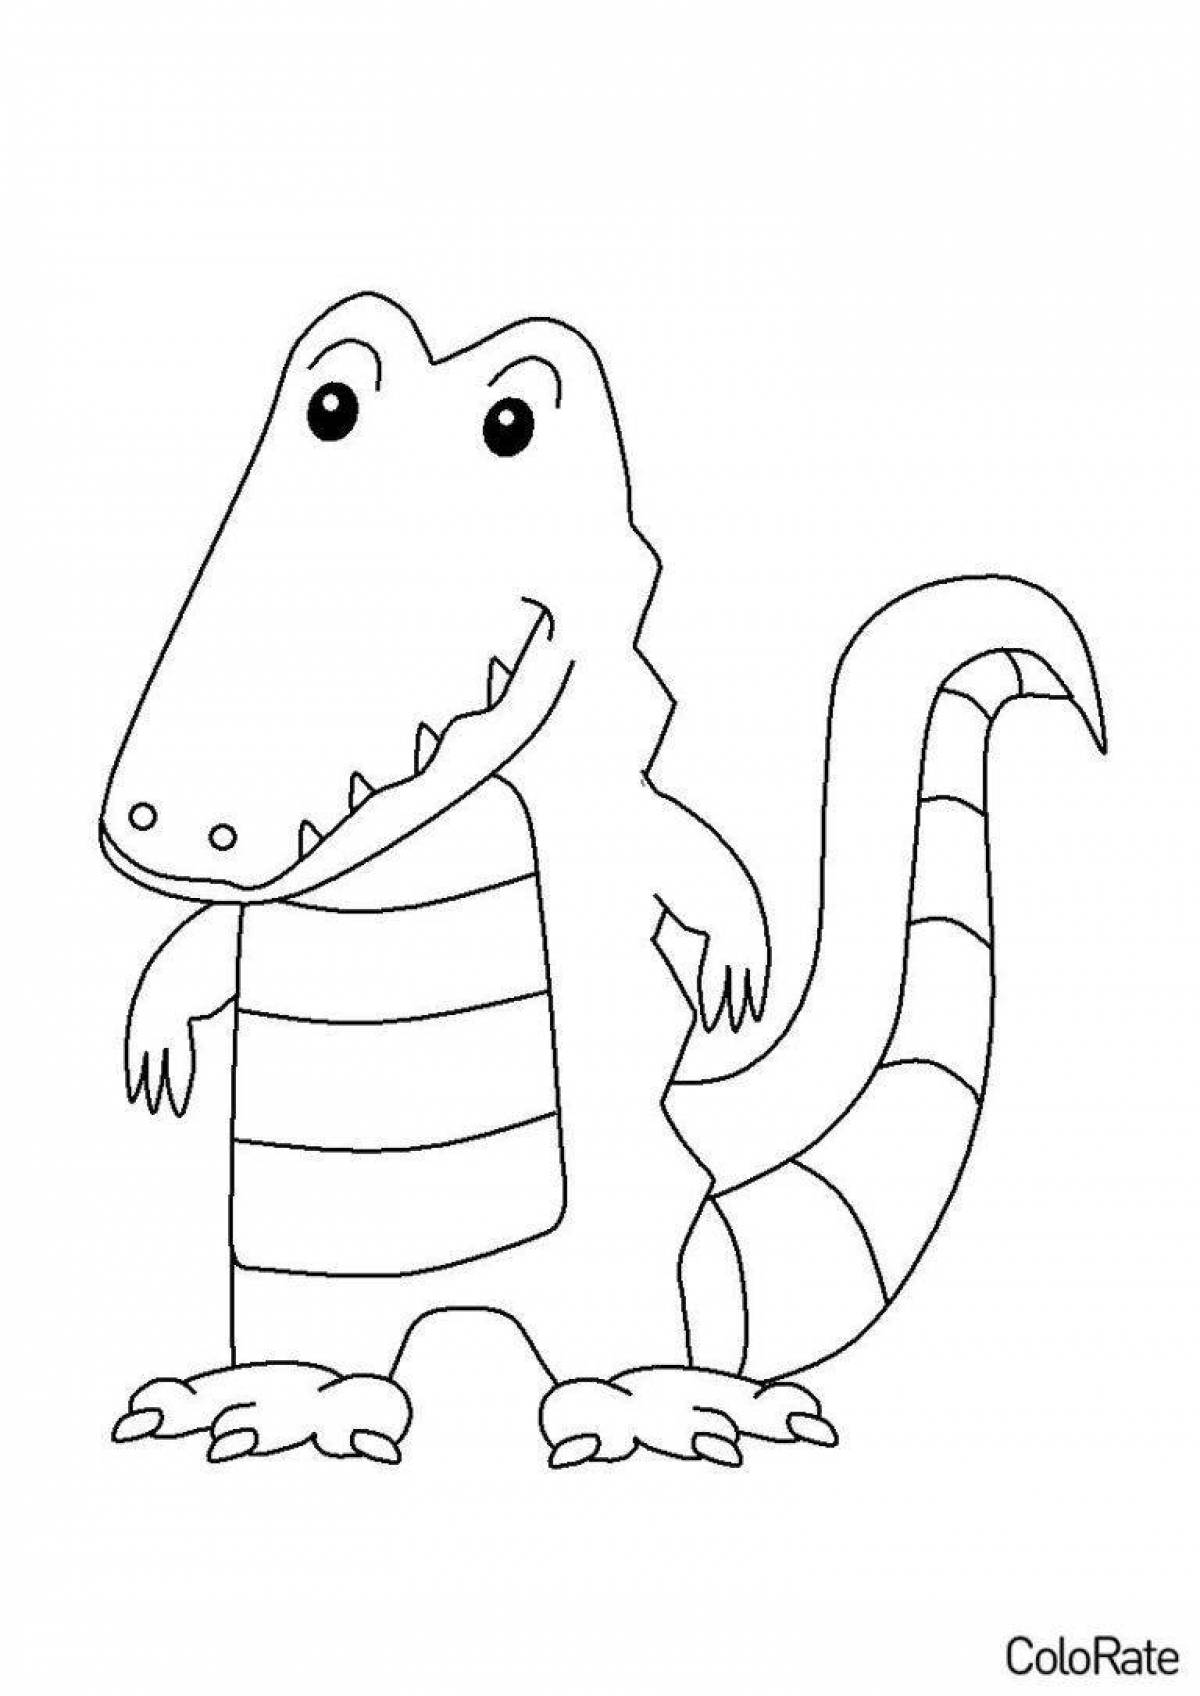 Crocodile drawing for kids #12